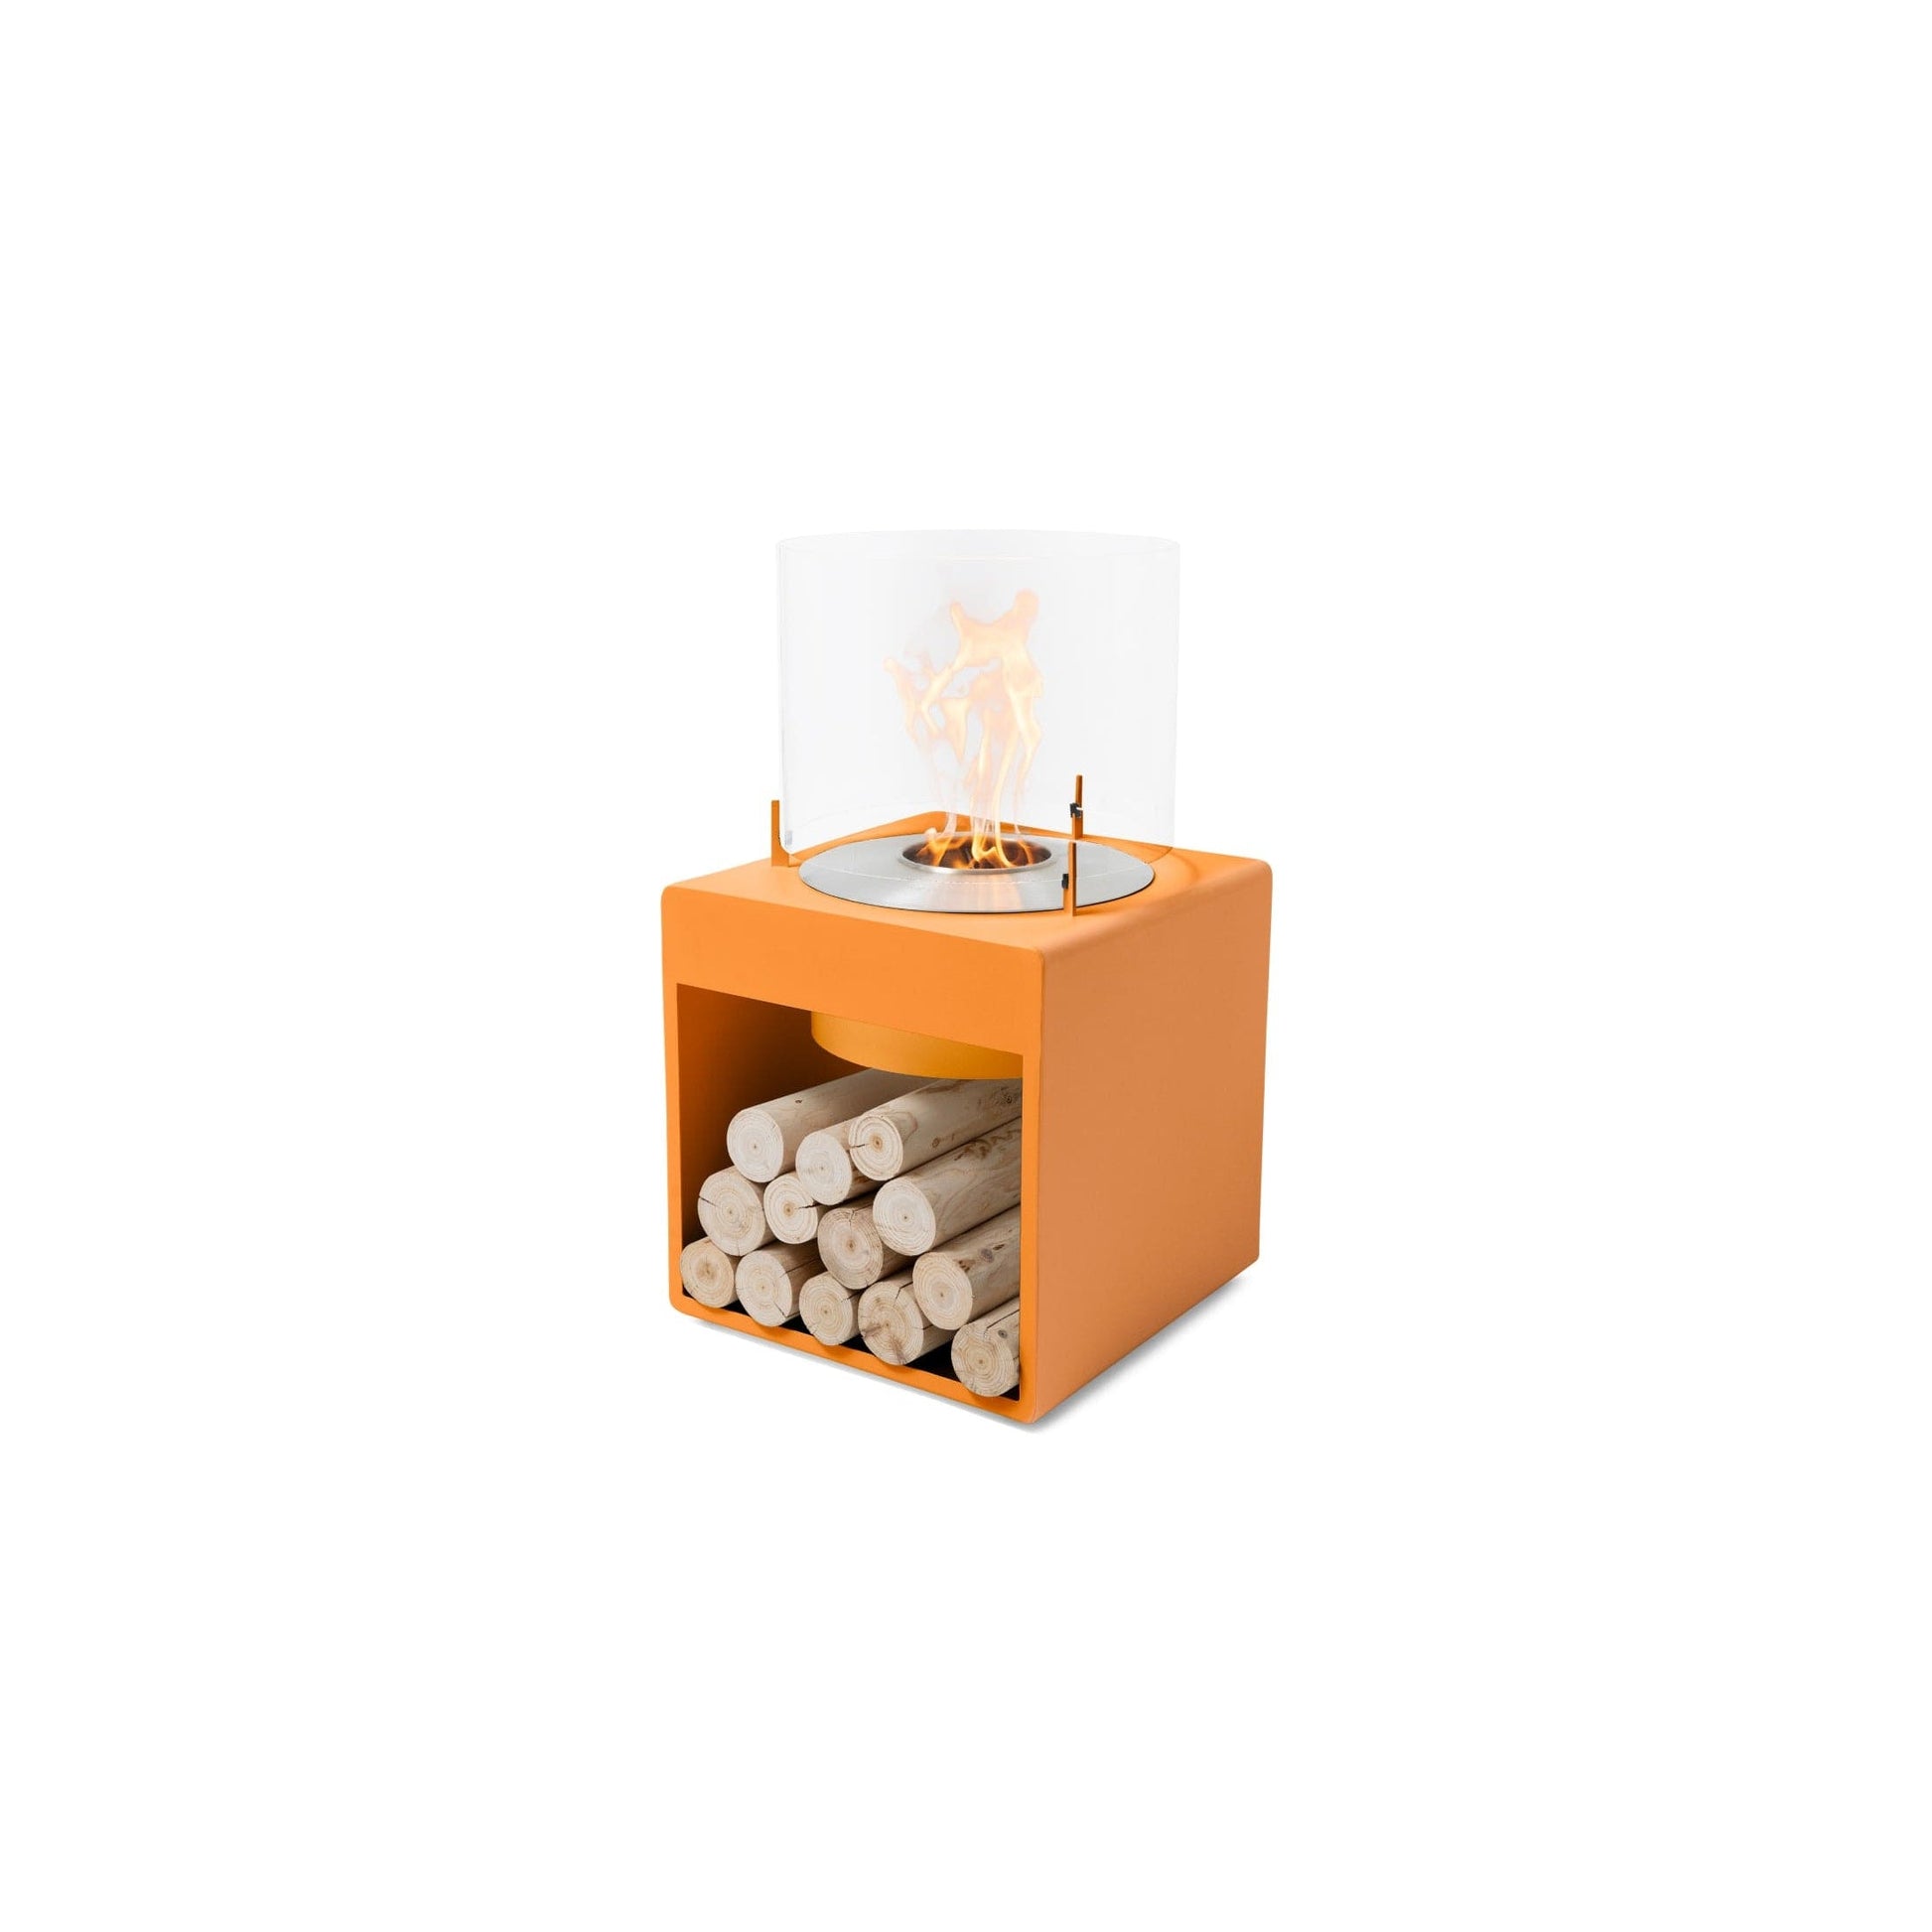 EcoSmart Fire POP 8L 31" Orange Freestanding Designer Fireplace with Stainless Steel Burner by MAD Design Group